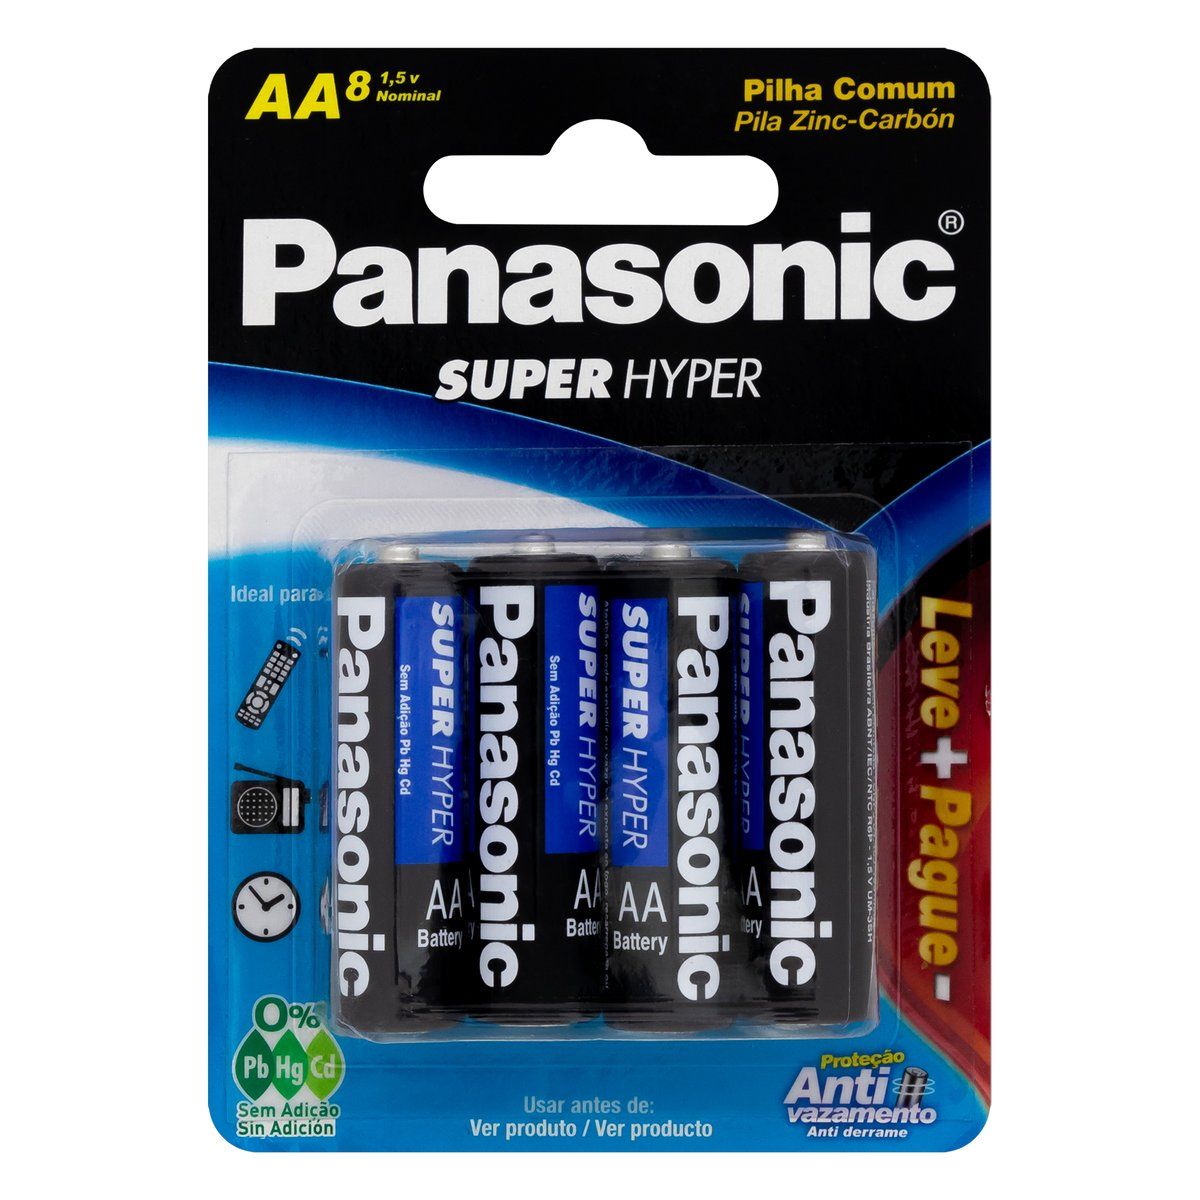 Pilha Comum AA Panasonic Super Hyper Pequena 8 Unidades